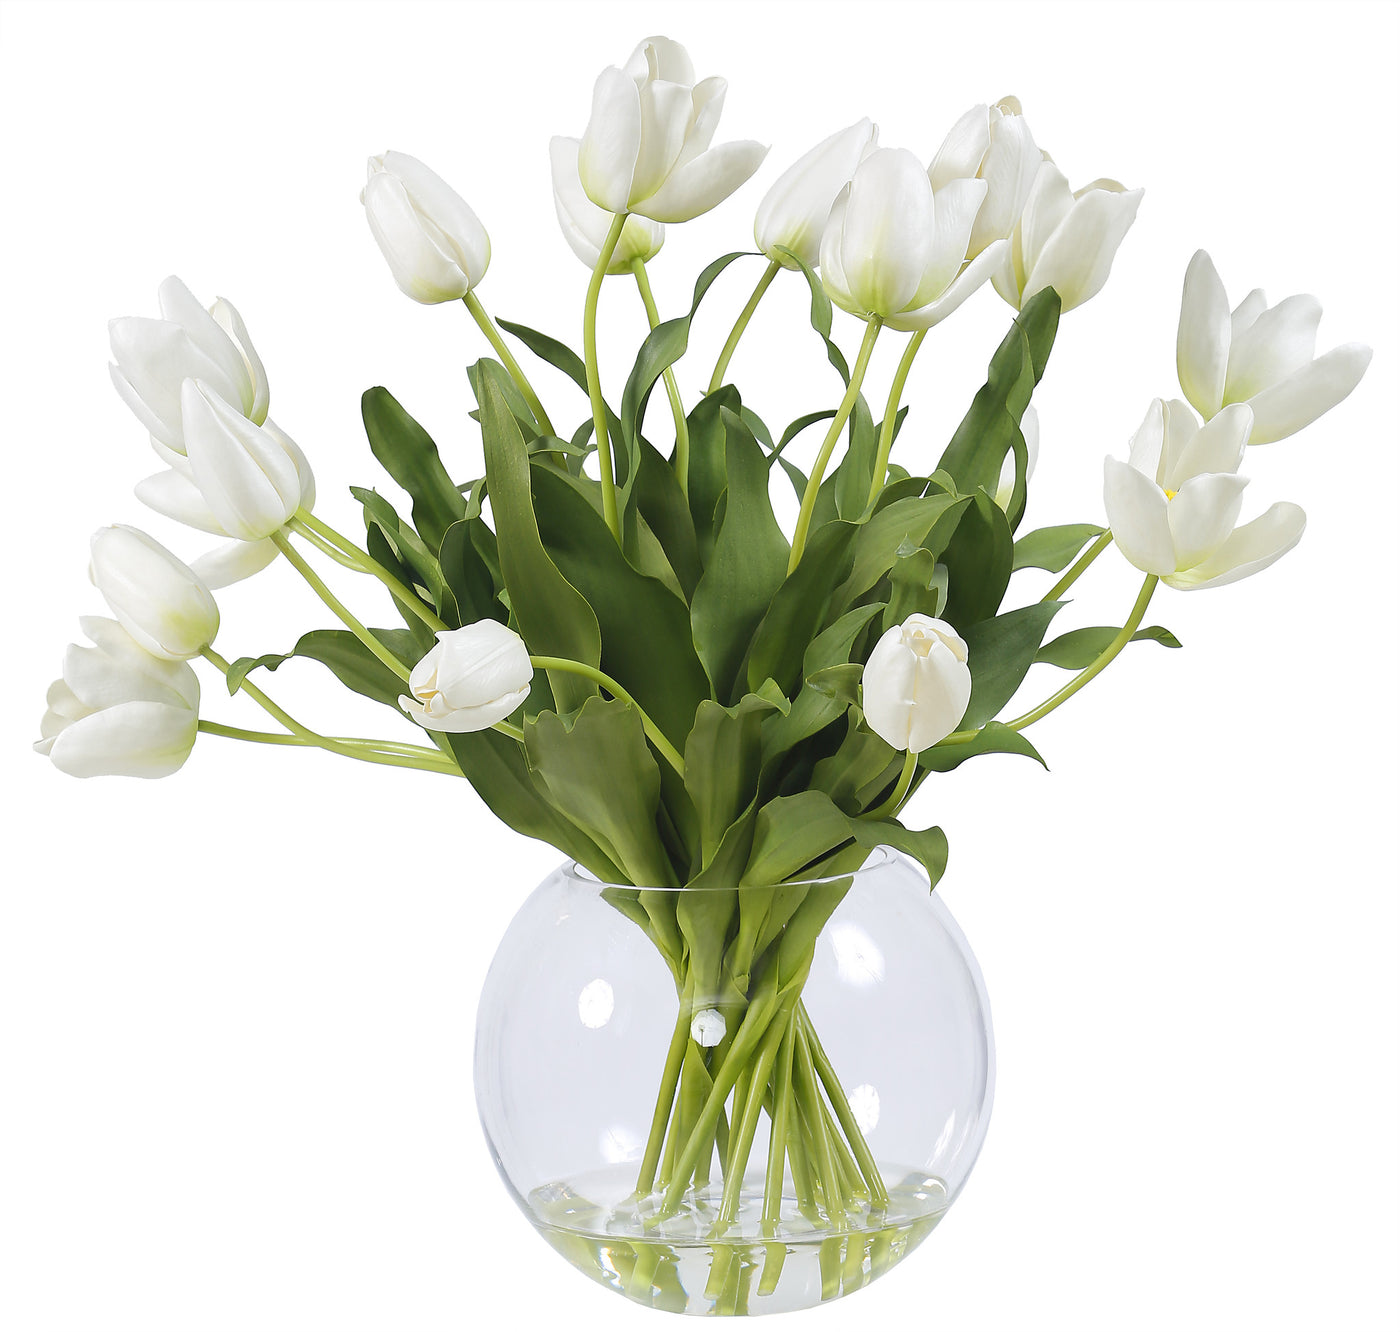 TULIPS IN GLASS 22'' (WHI004-WH) - Winward Home silk flower arrangements